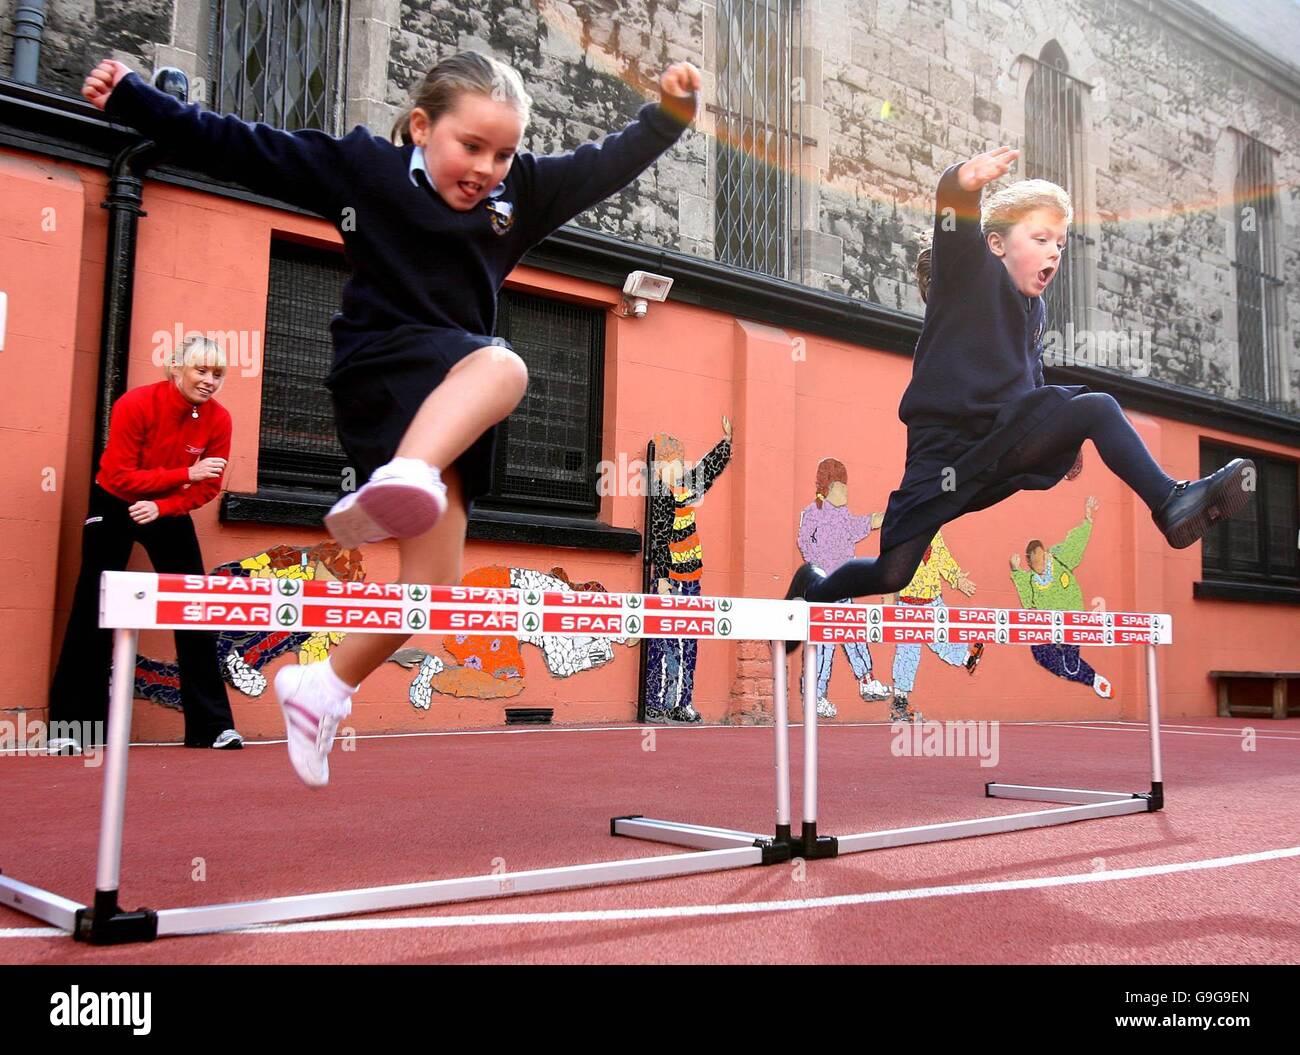 Ireland sport initiative Stock Photo